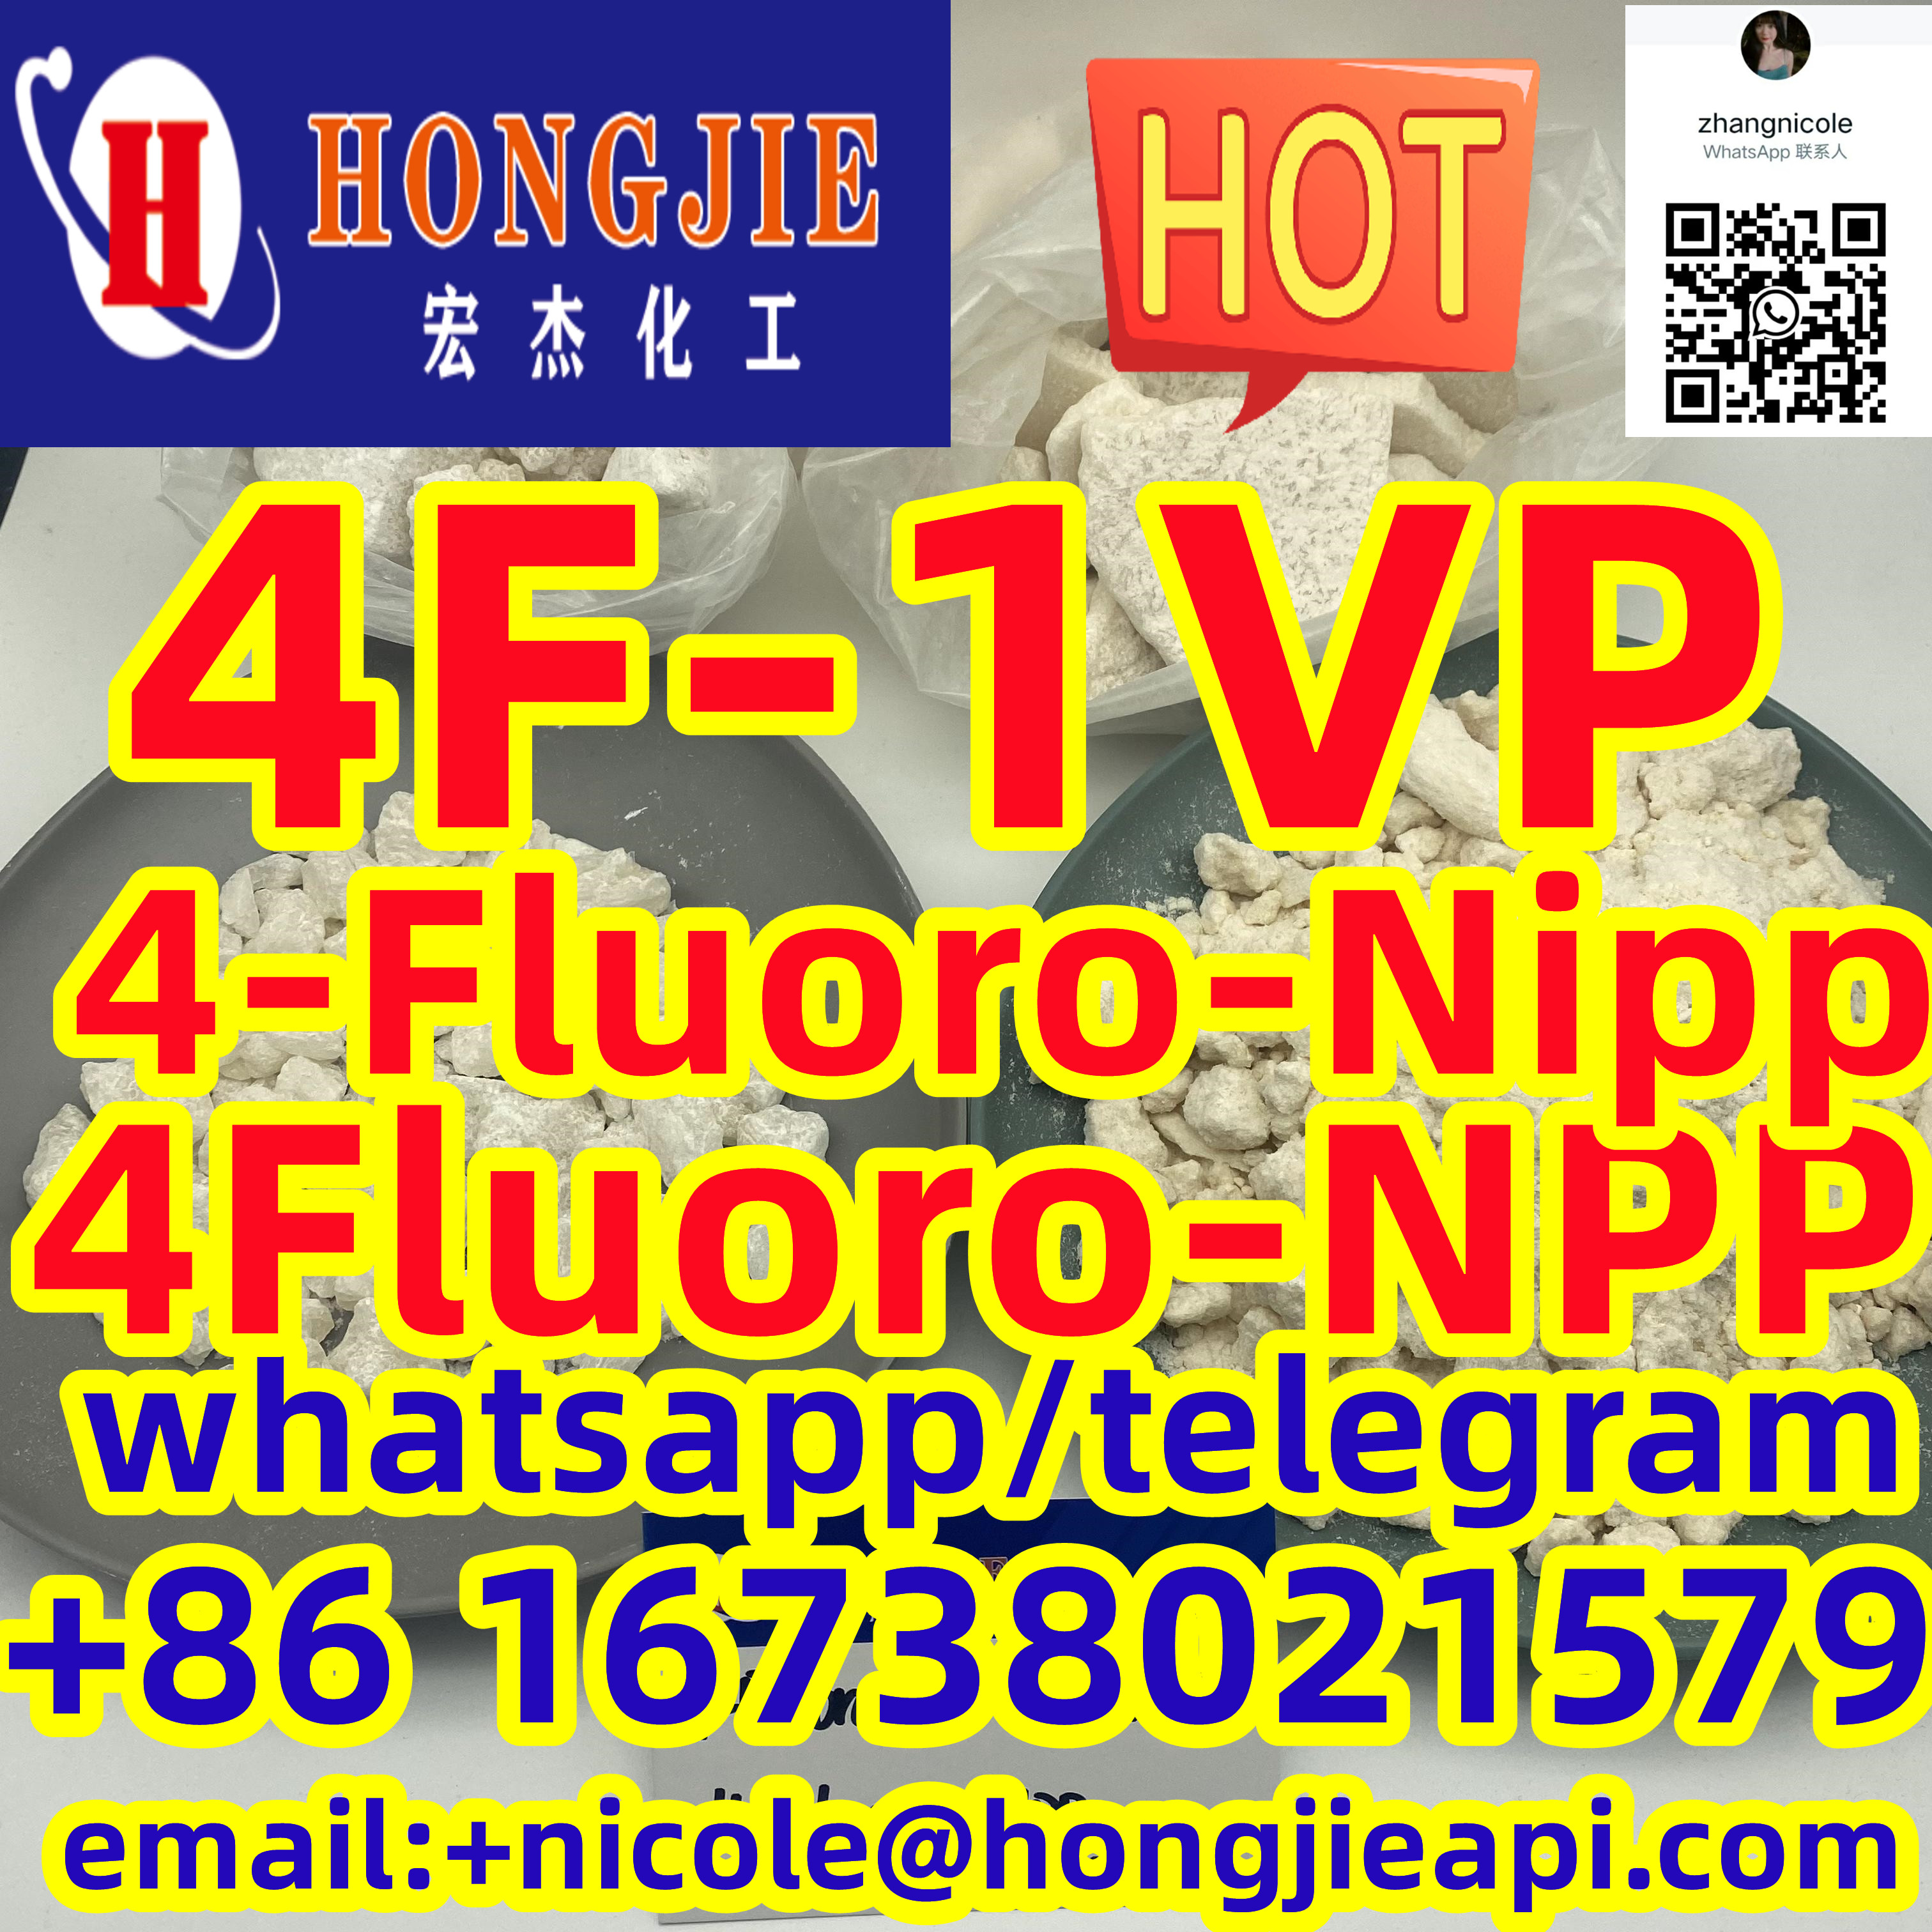 Good Effect   4-Fluoro-Nipp 4Fluoro-NPP  4F-1VP